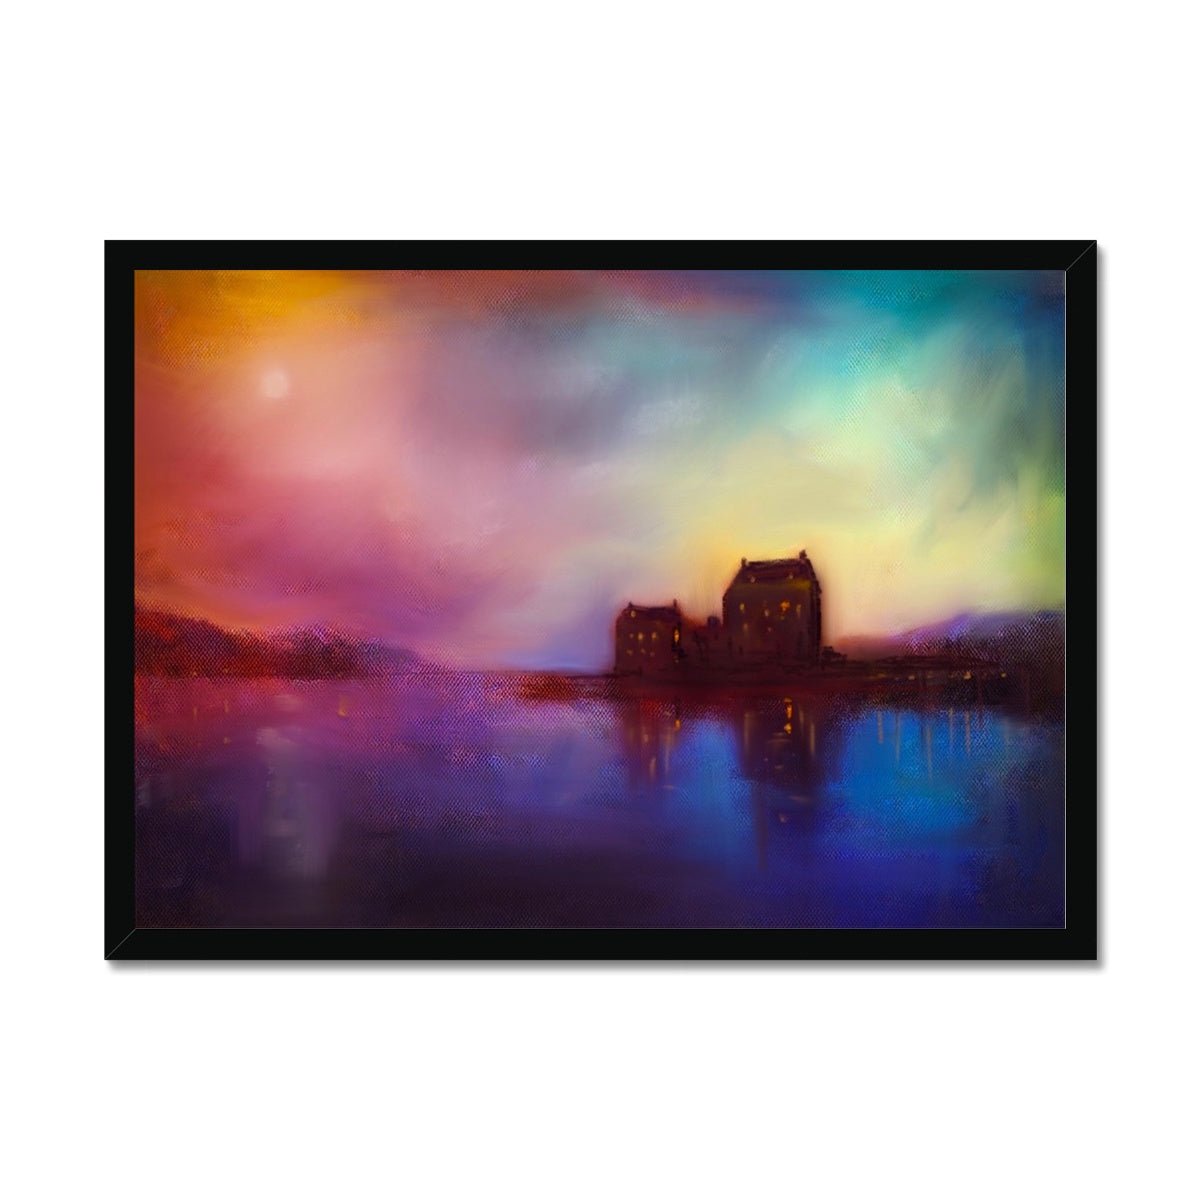 Eilean Donan Castle Sunset Painting | Framed Prints From Scotland-Framed Prints-Scottish Castles Art Gallery-A2 Landscape-Black Frame-Paintings, Prints, Homeware, Art Gifts From Scotland By Scottish Artist Kevin Hunter